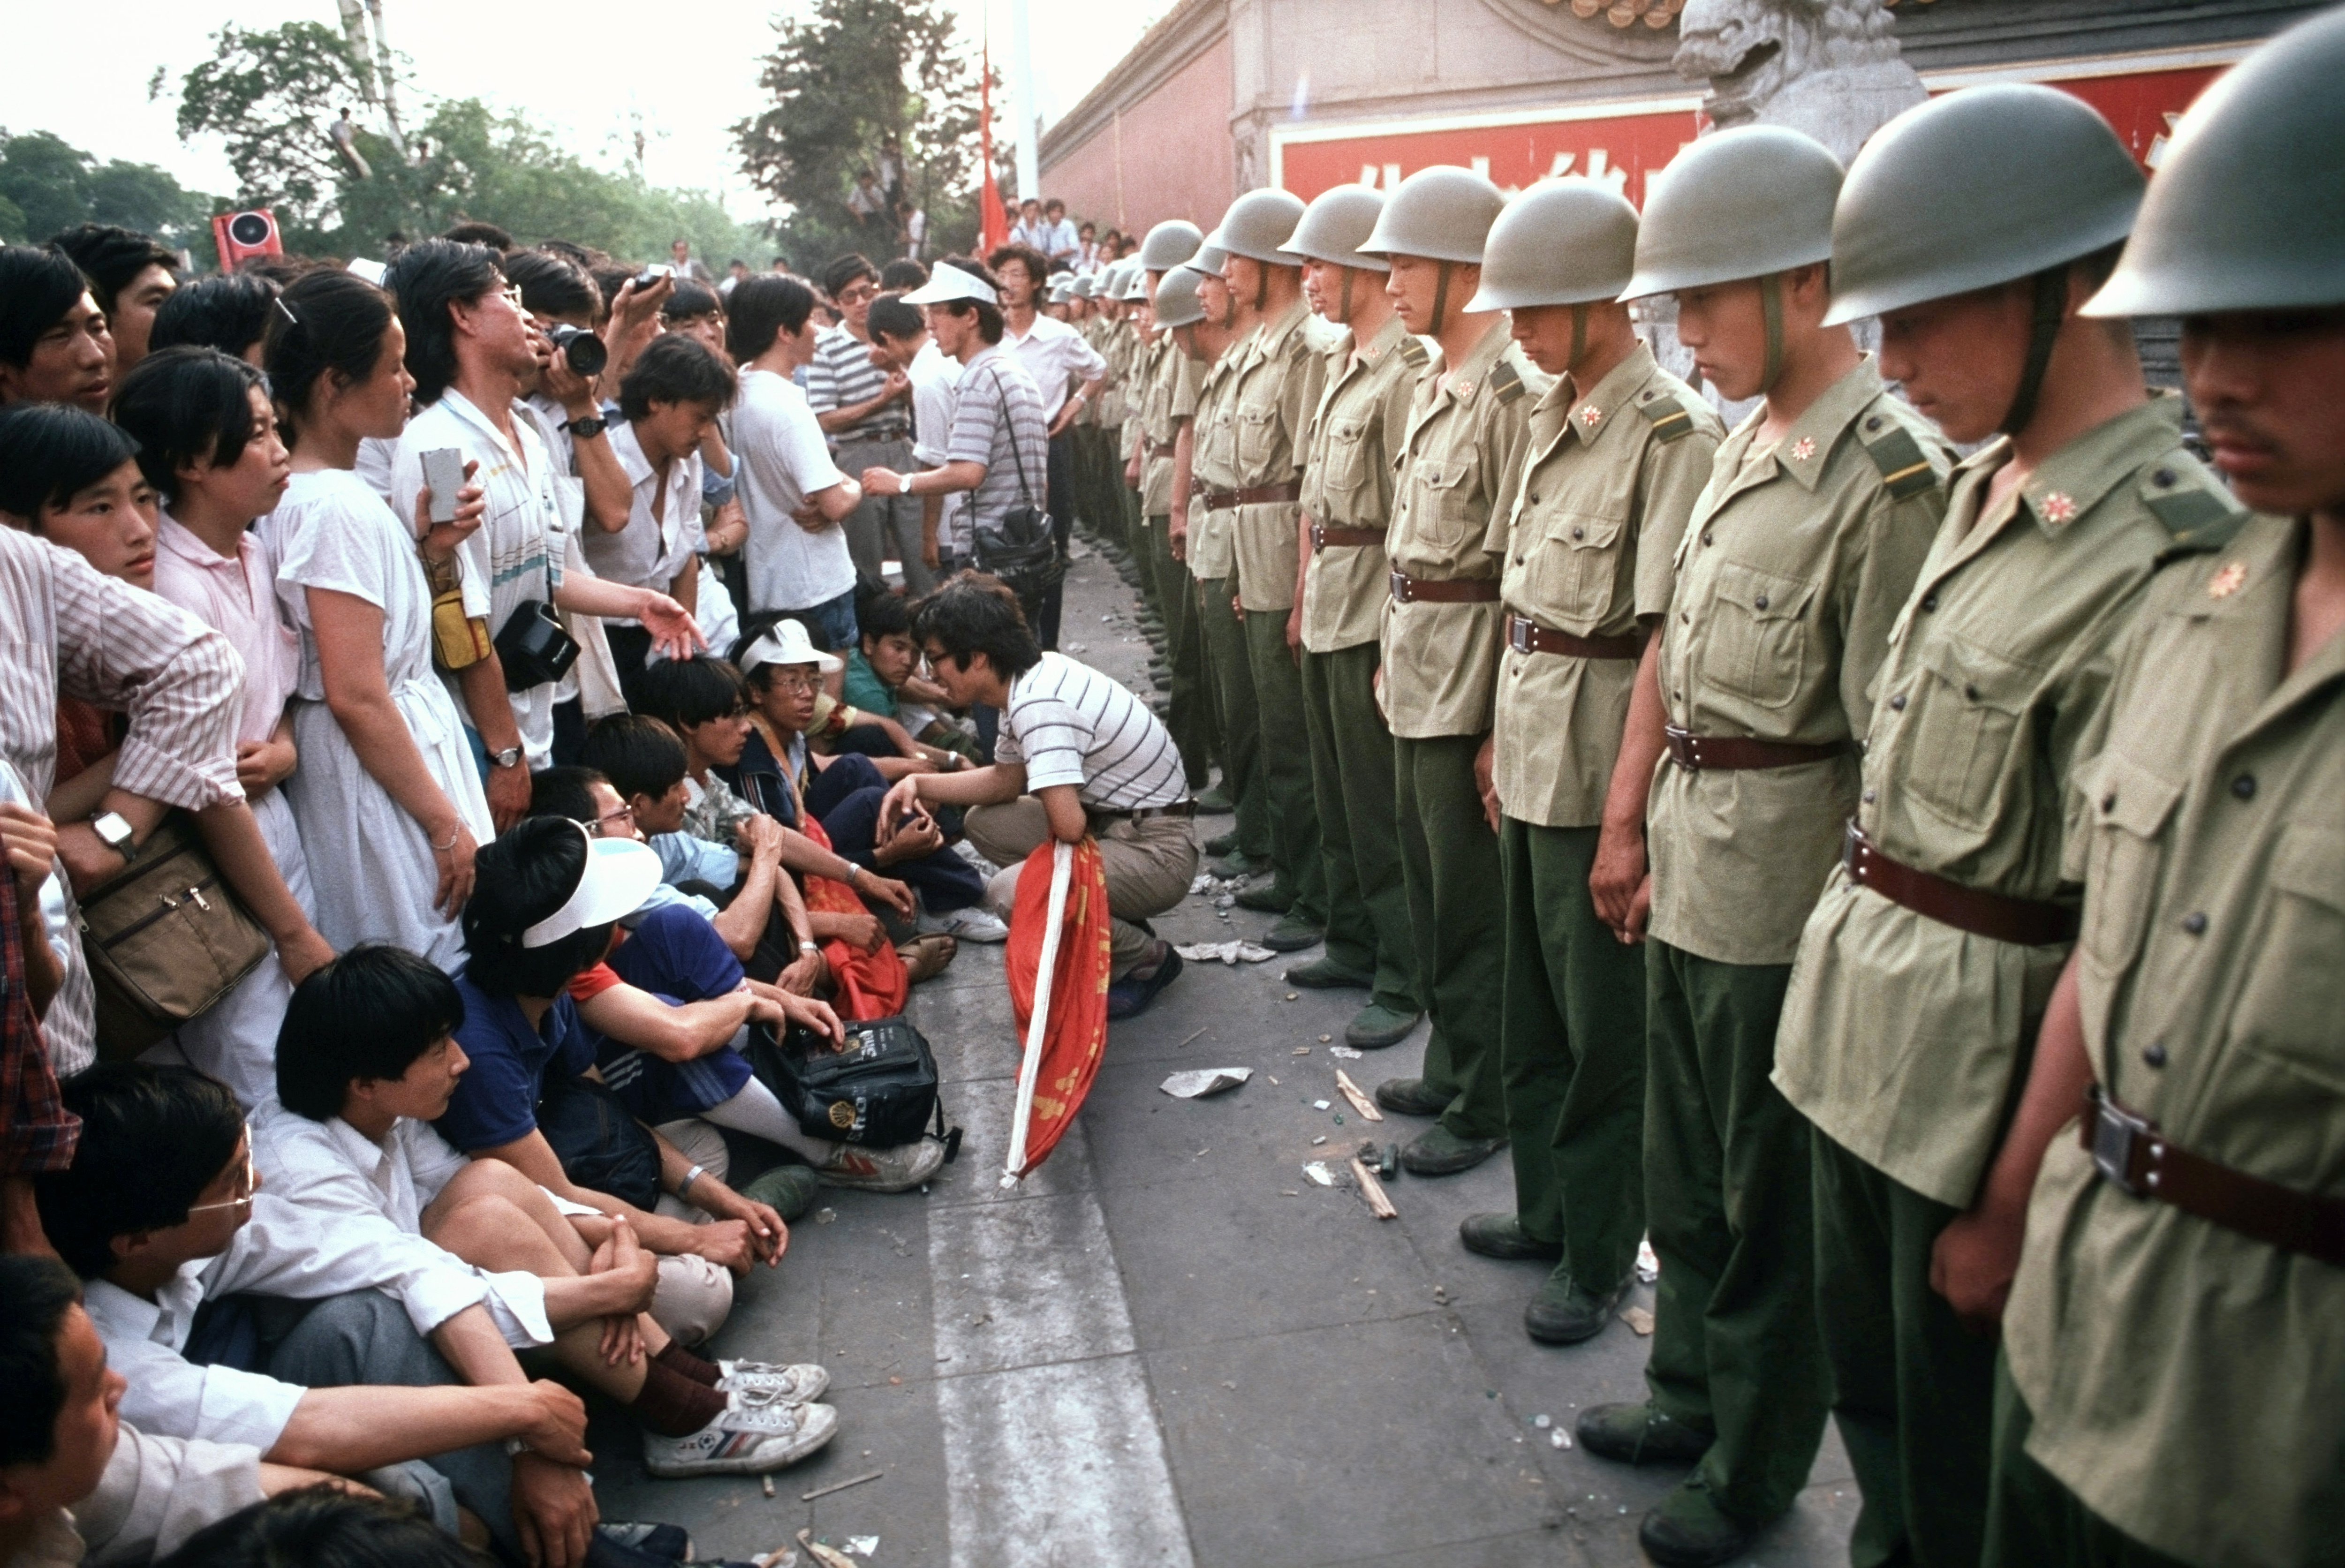 Tiananmen Square Revisited